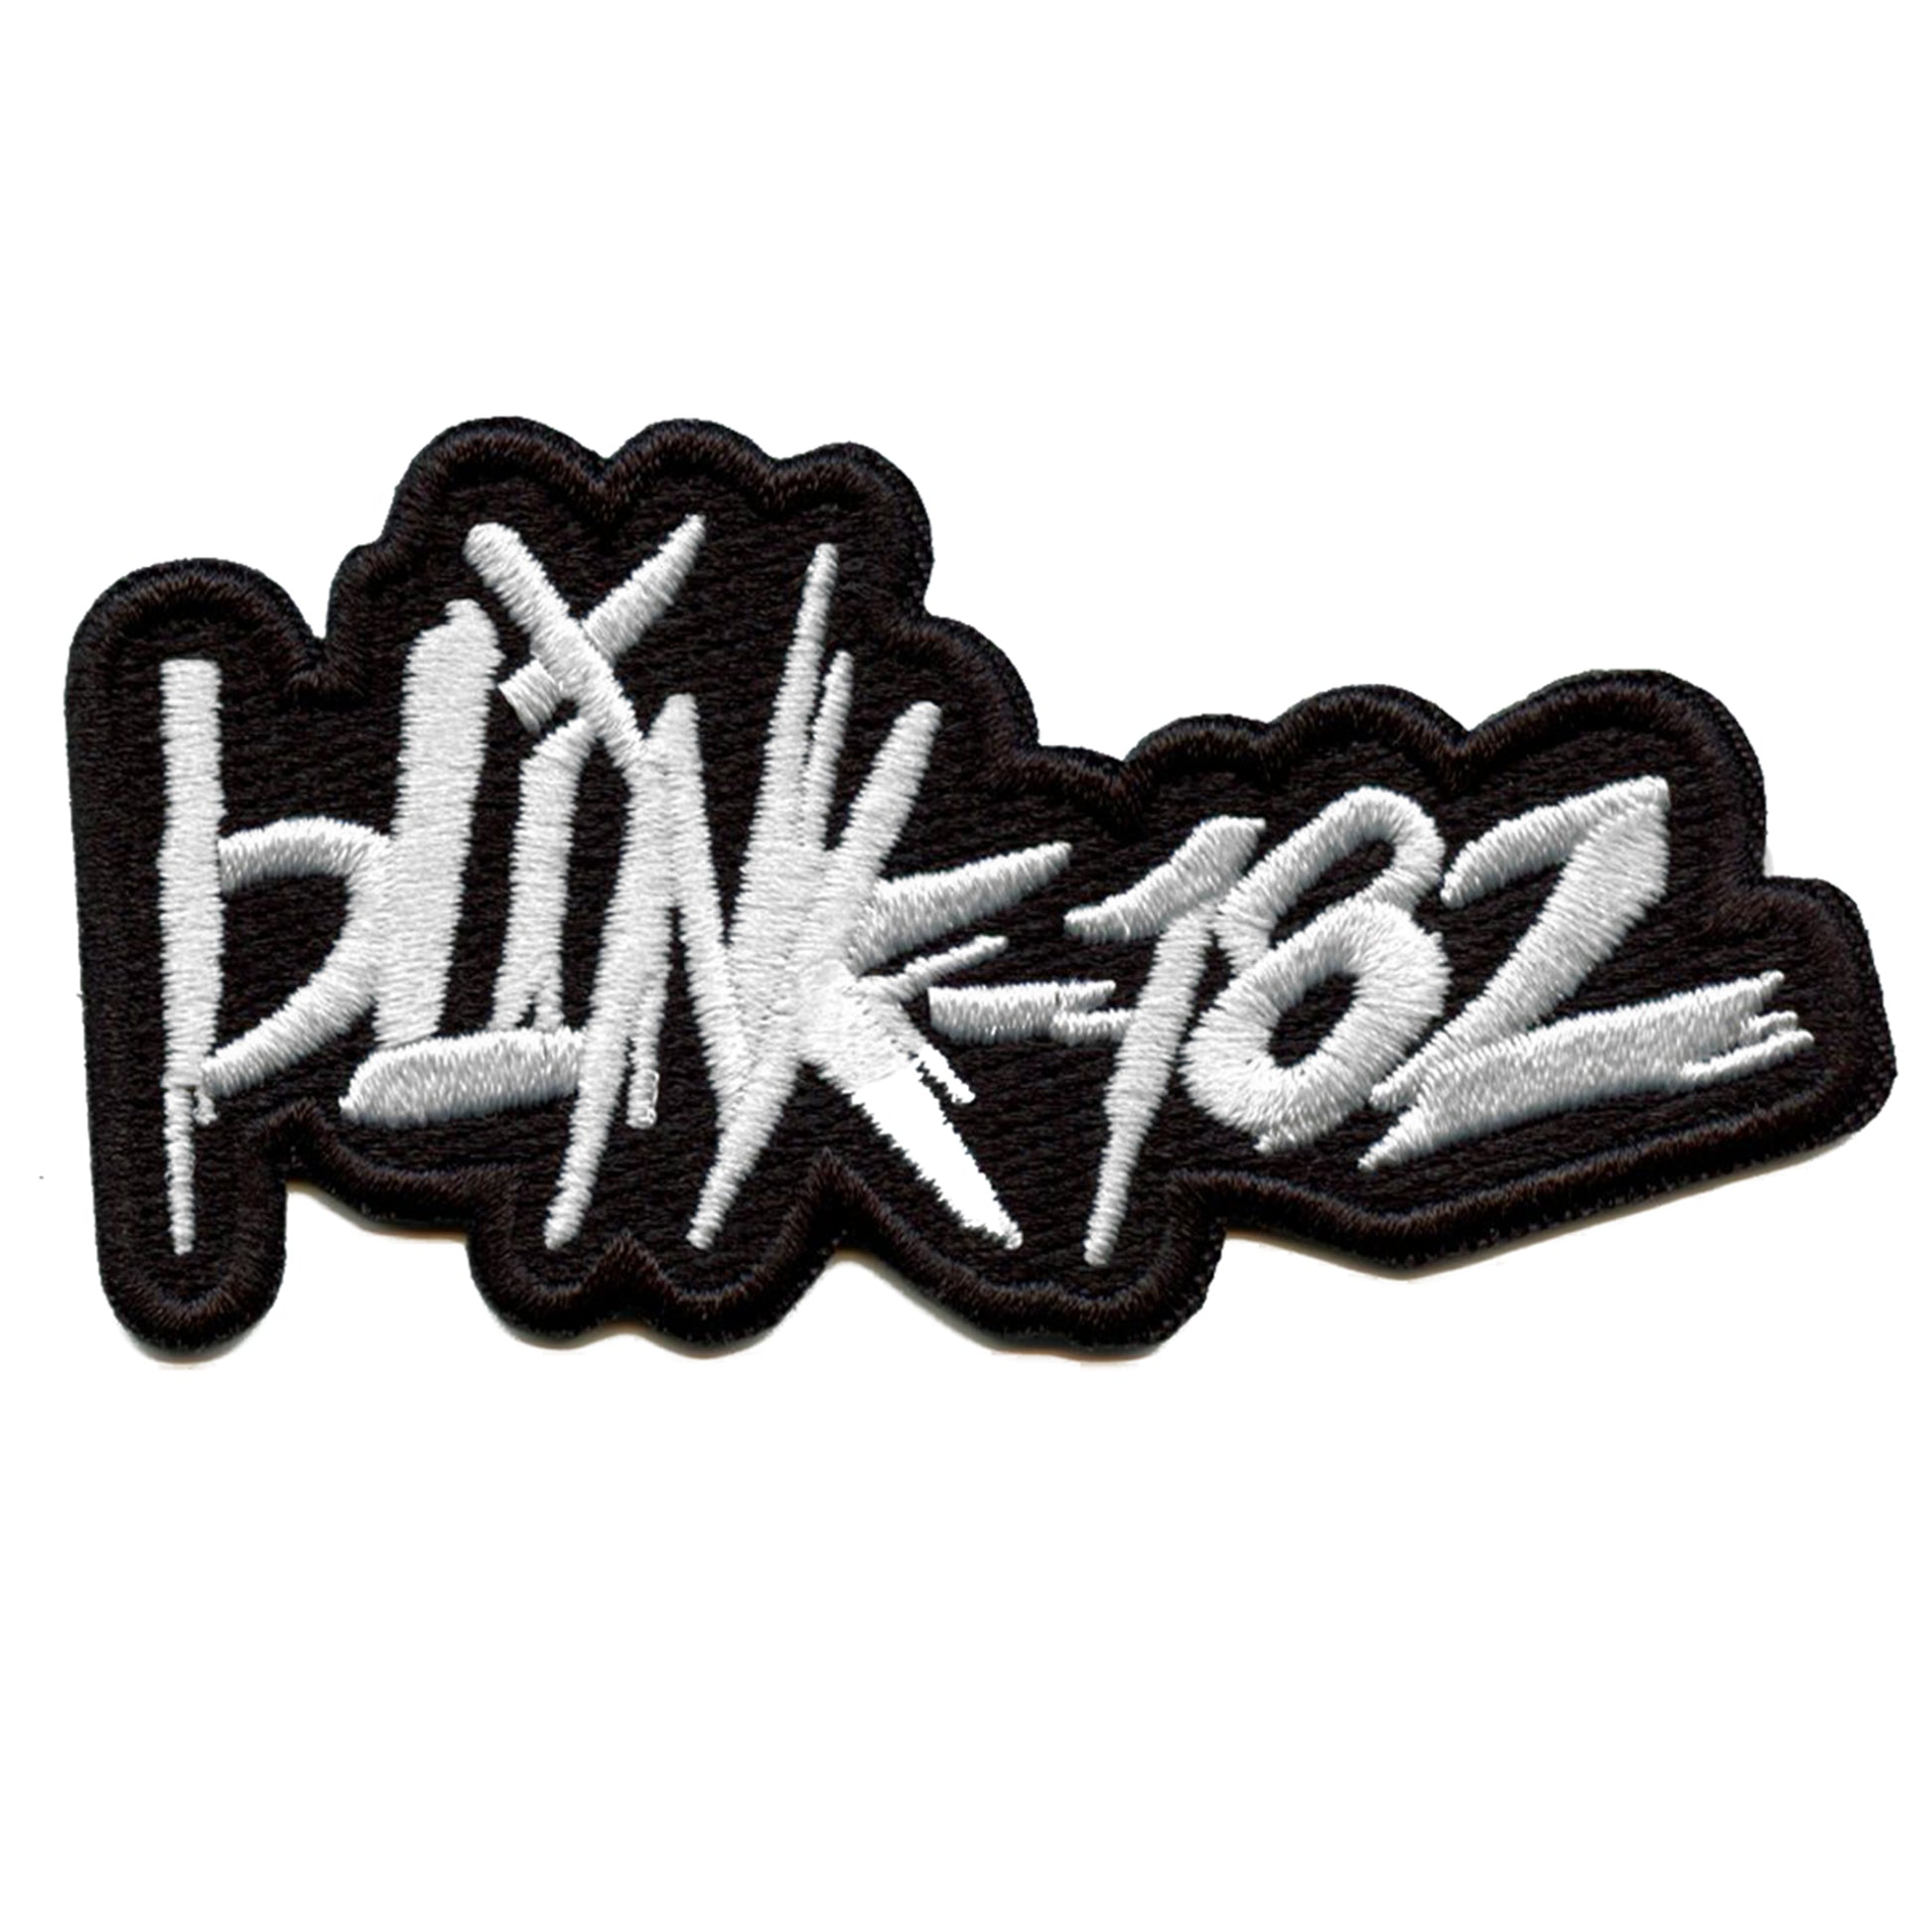 punk rock band logo